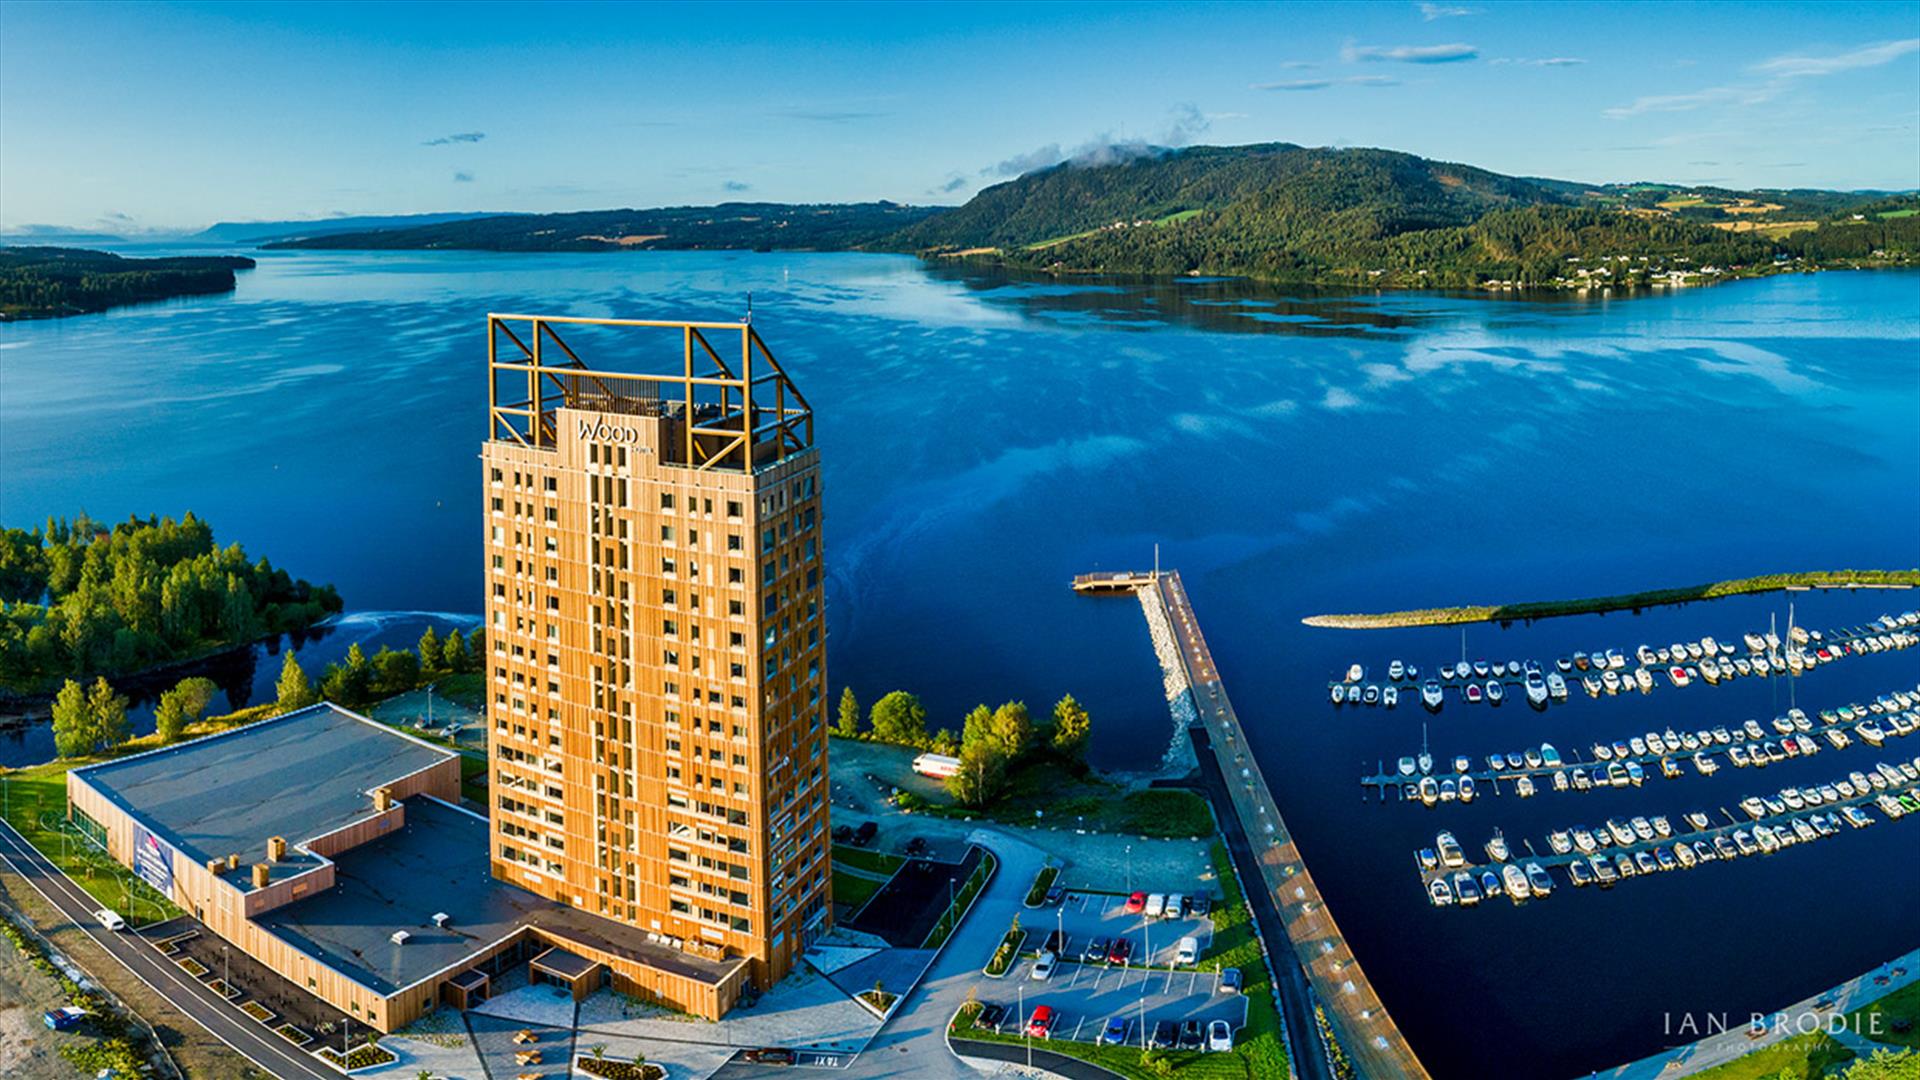 Wood Hotell - Drone photo towards lake Mjøsa